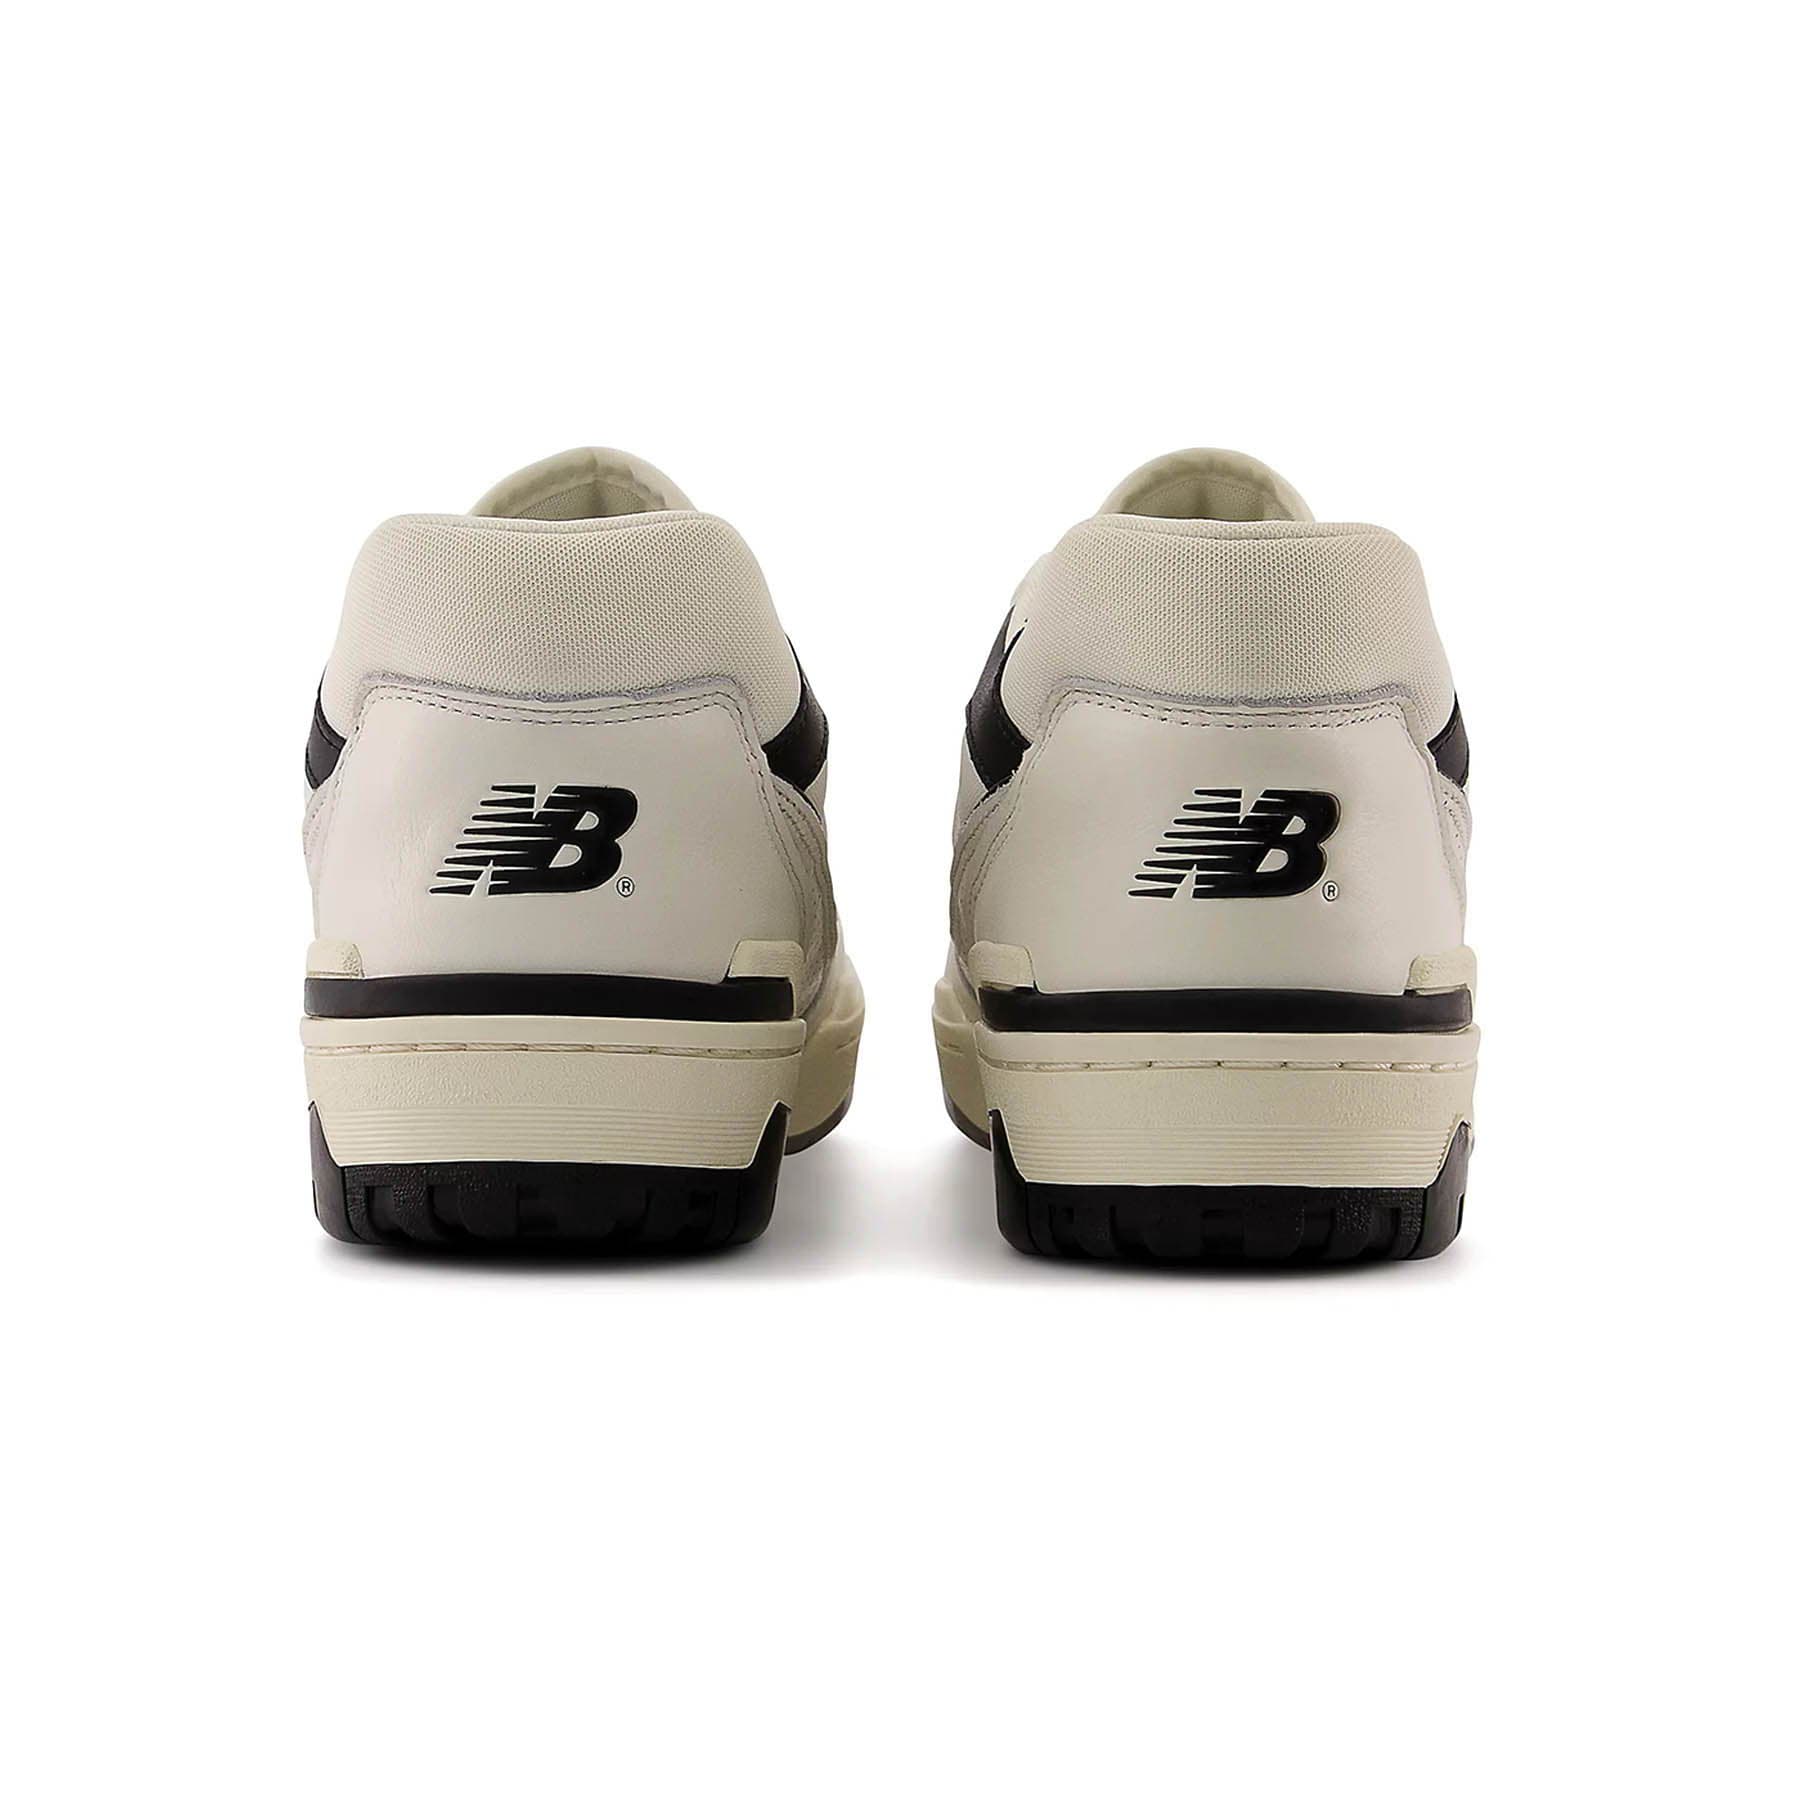 【特價區】new balance 550 cream black 27.5cm 靴